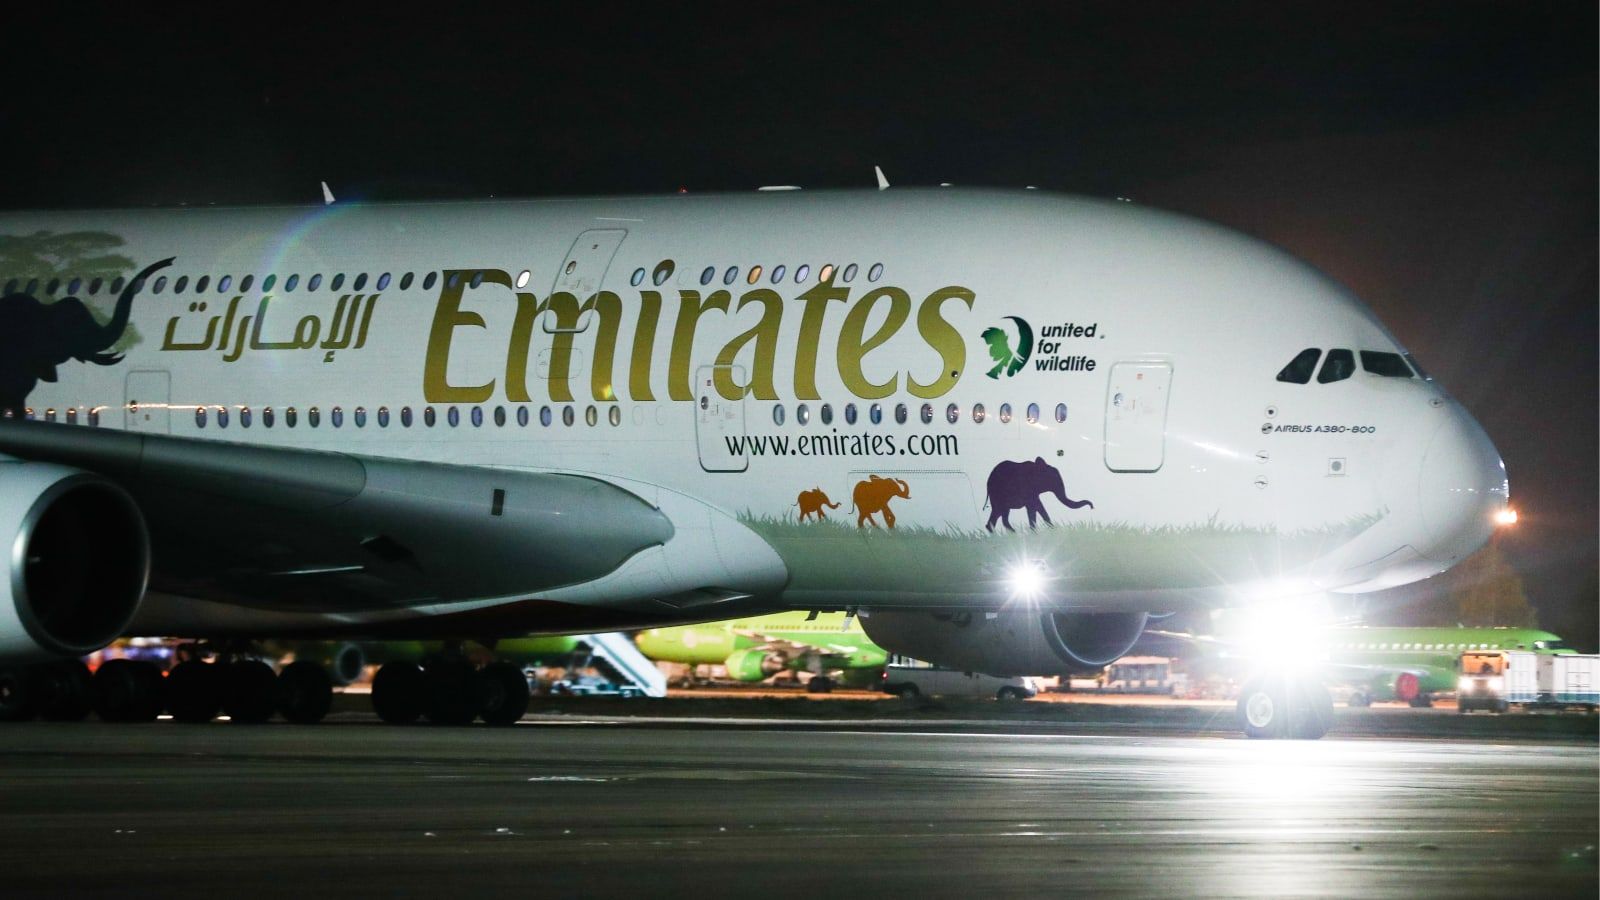 Coronavirus: Emirates suspends passenger flights as UAE halts air